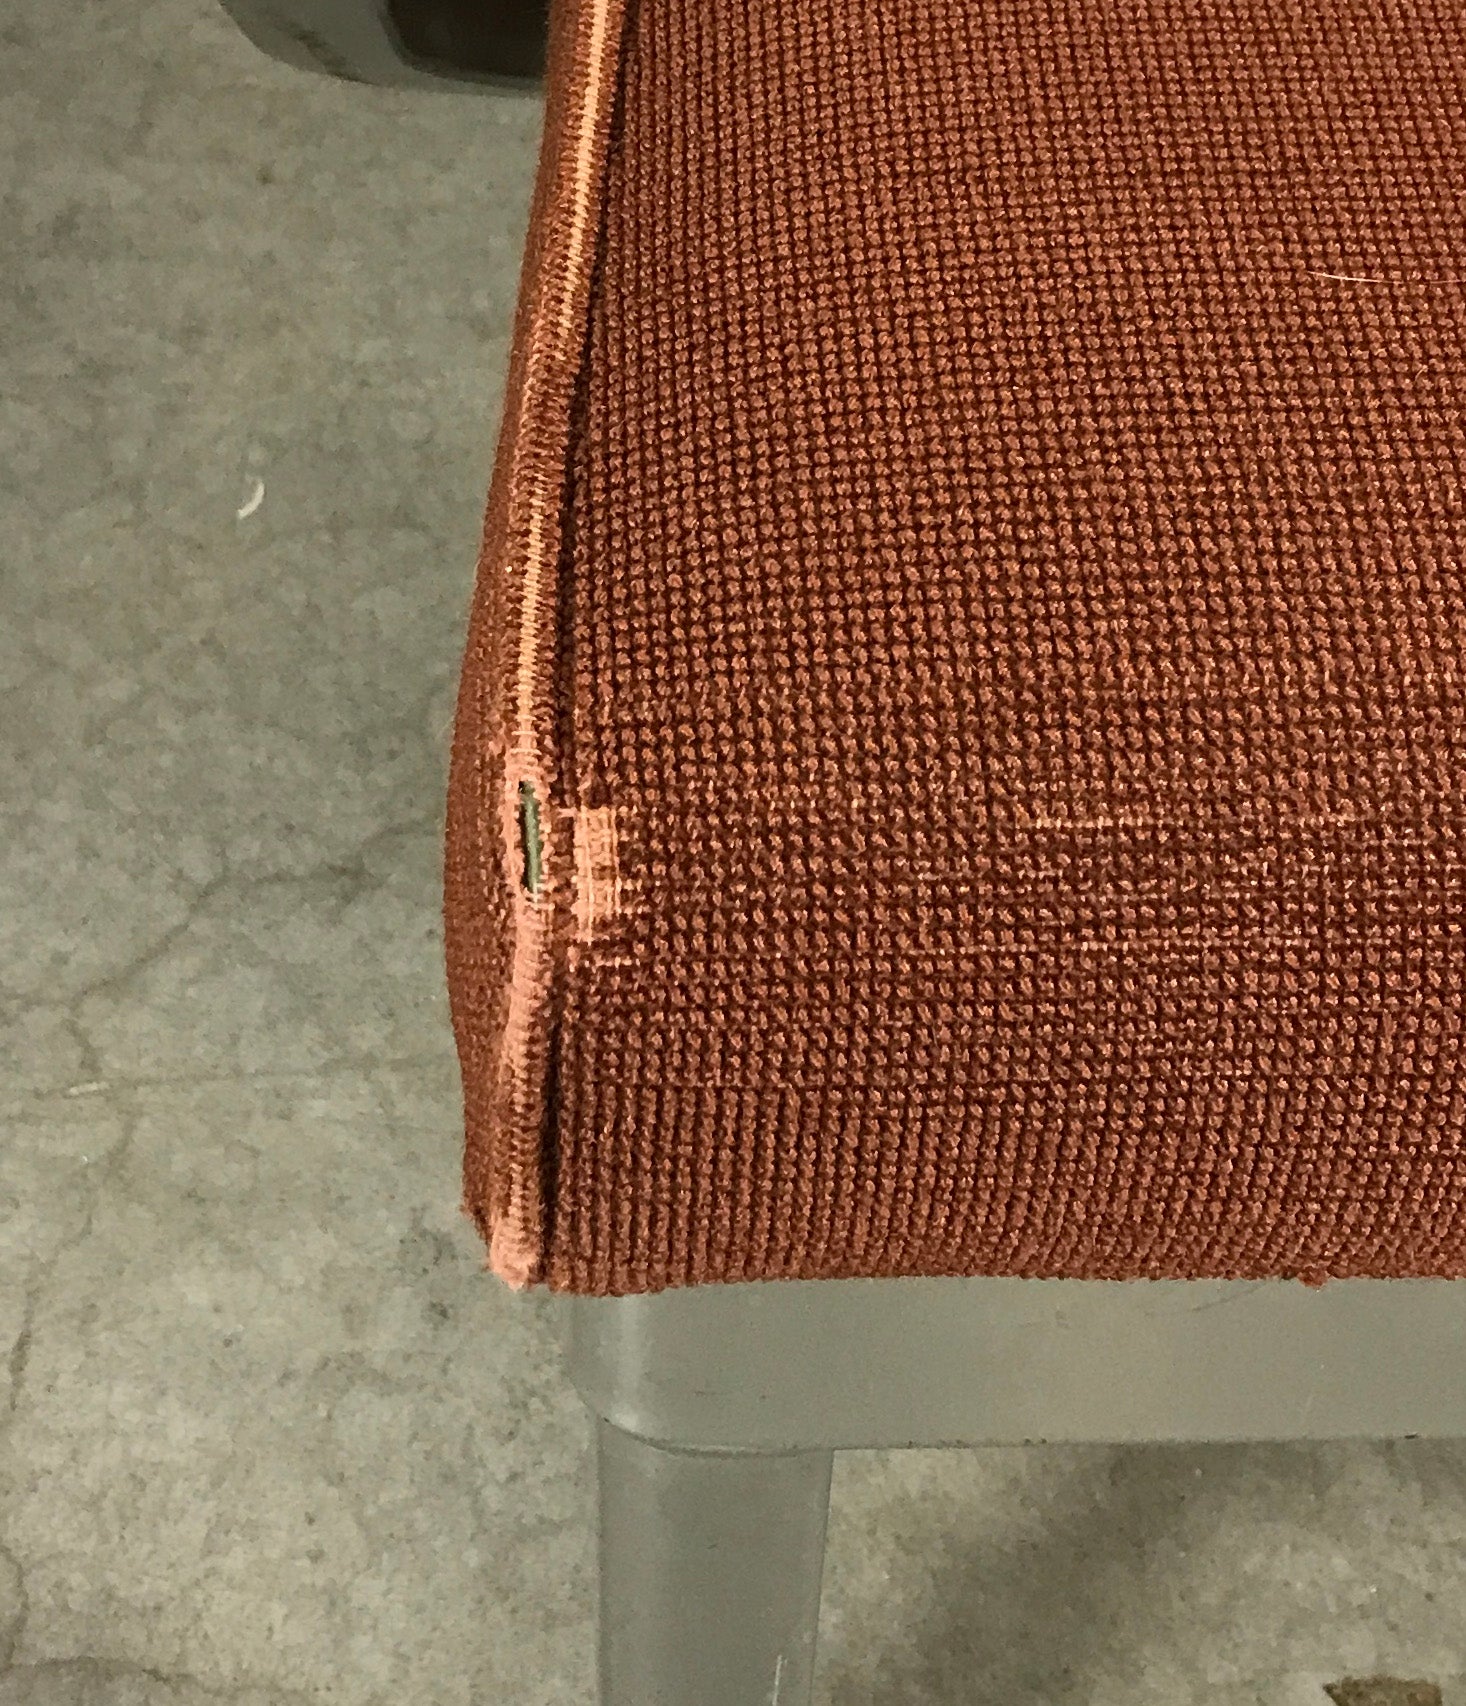 Harter Corporation Orange Chair